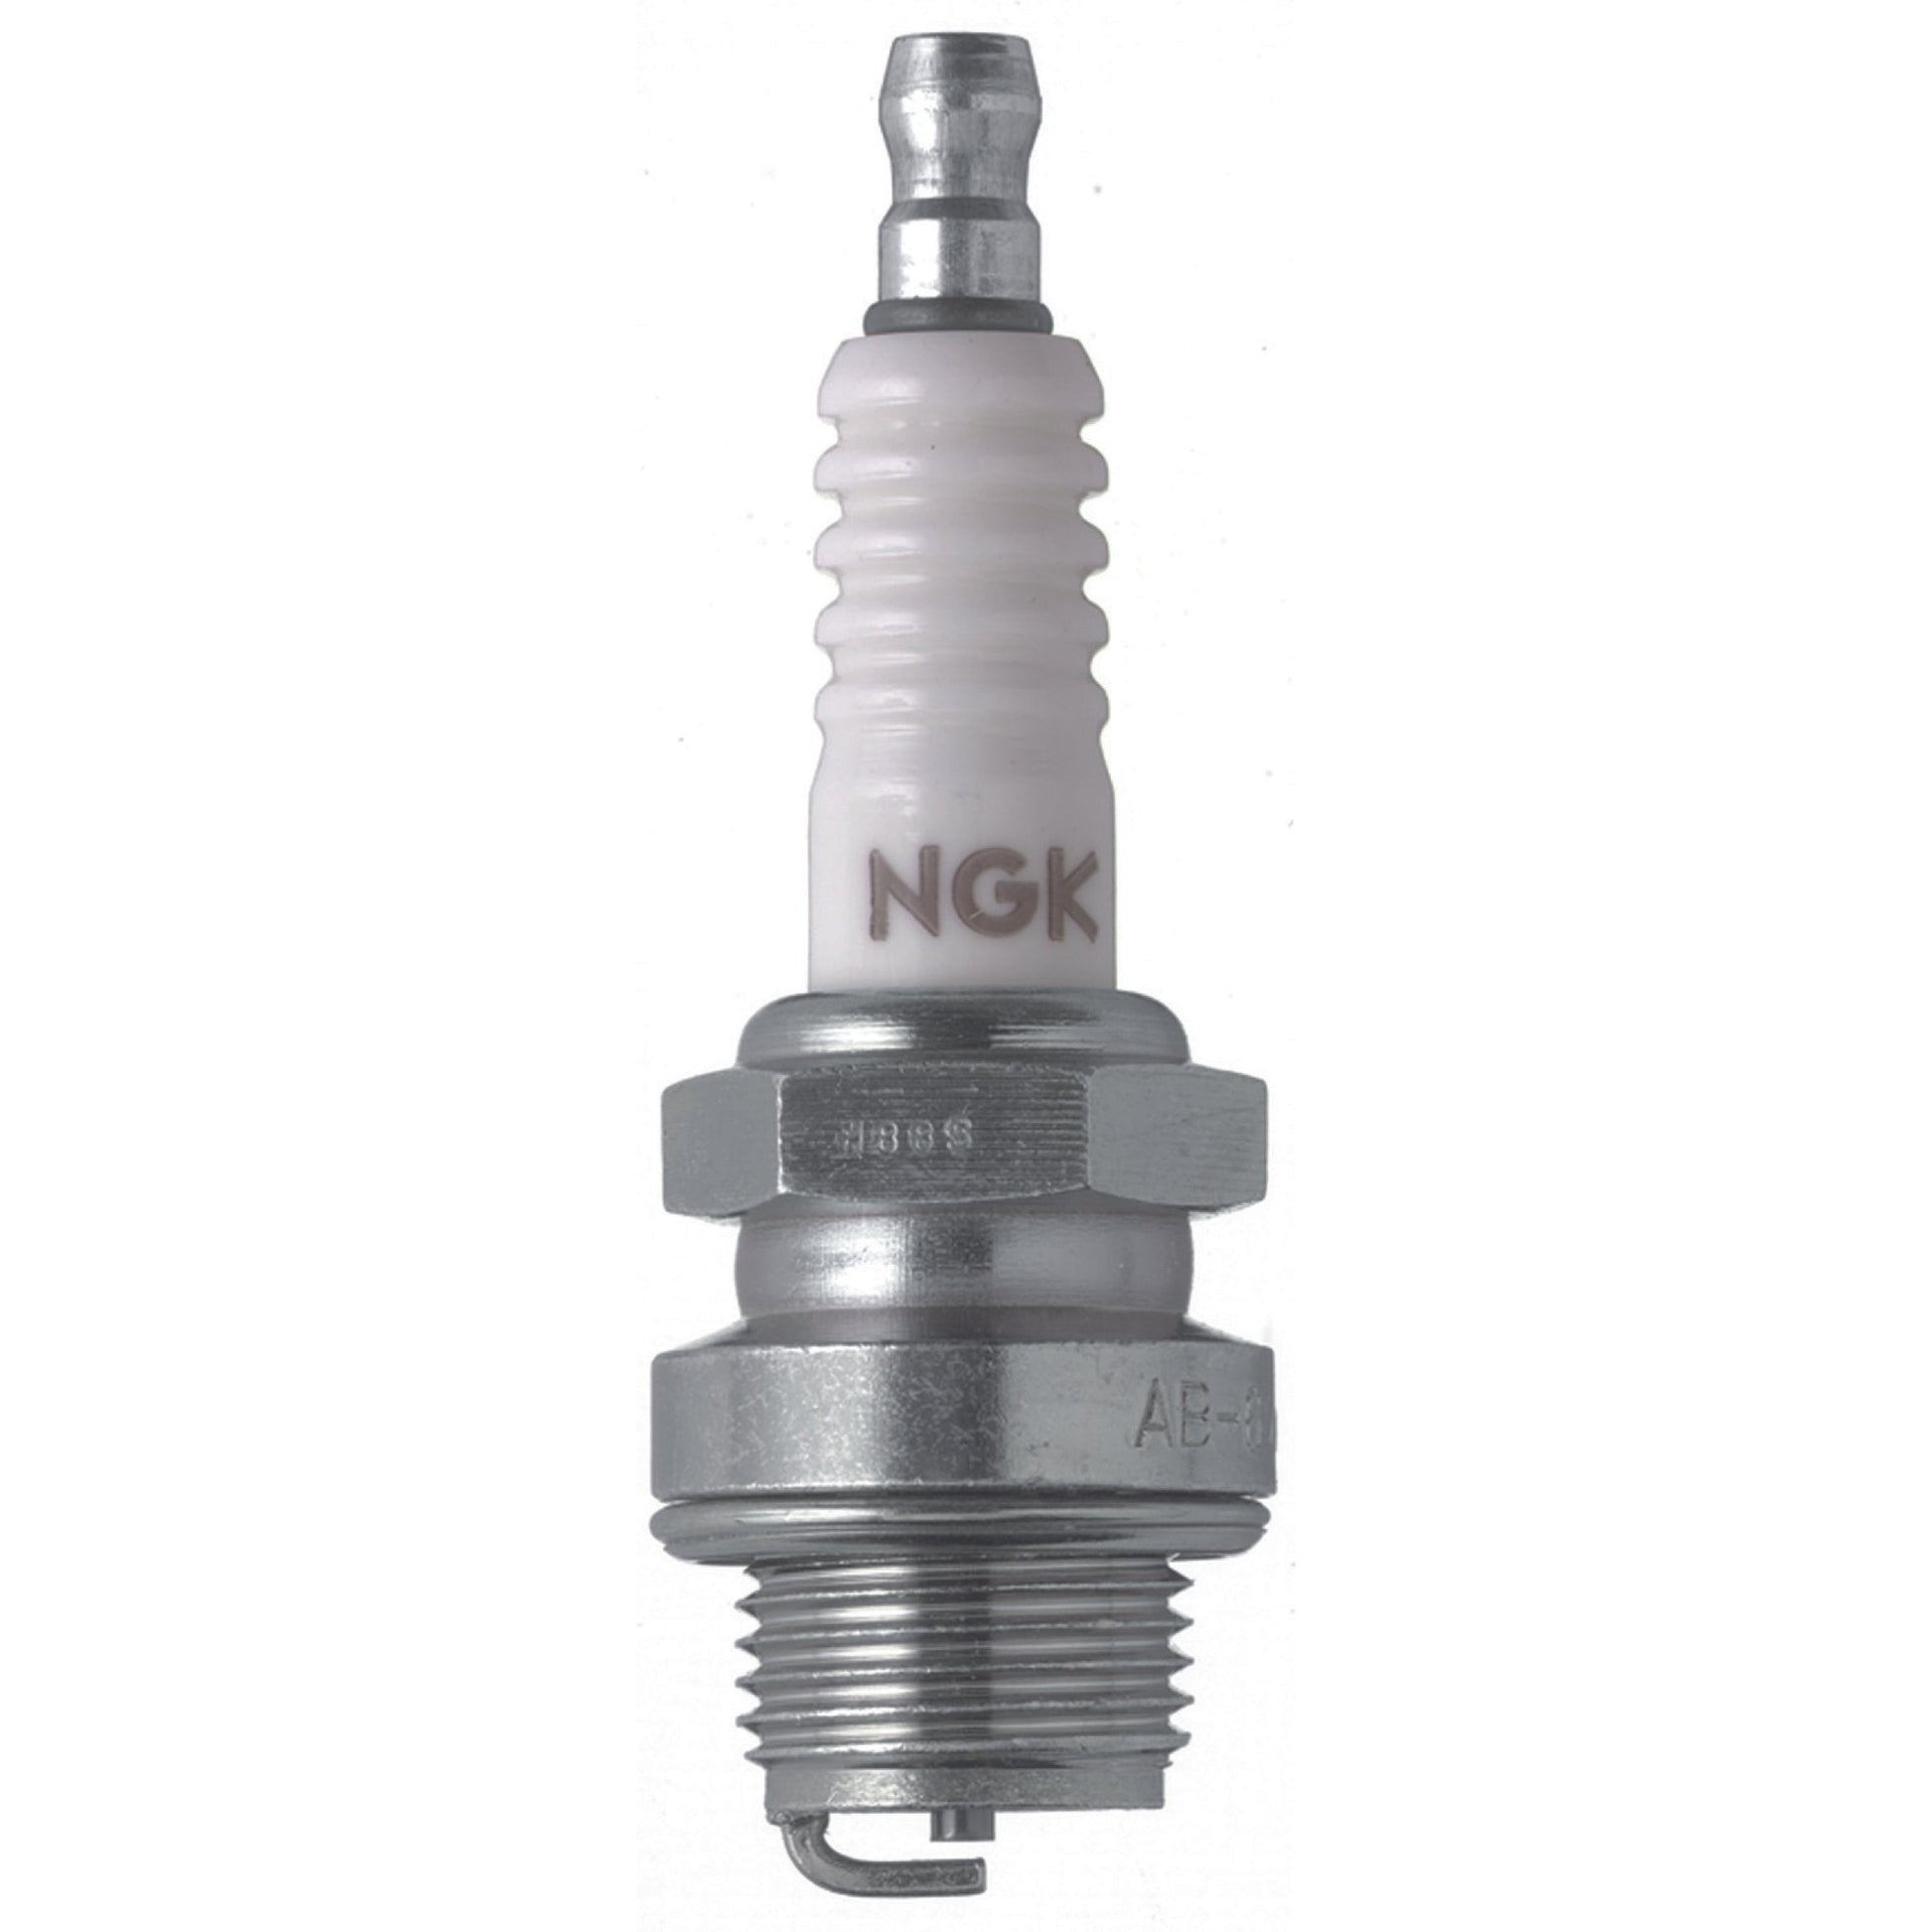 NGK Standard Spark Plug Box of 1 (AB-2) NGK Spark Plugs